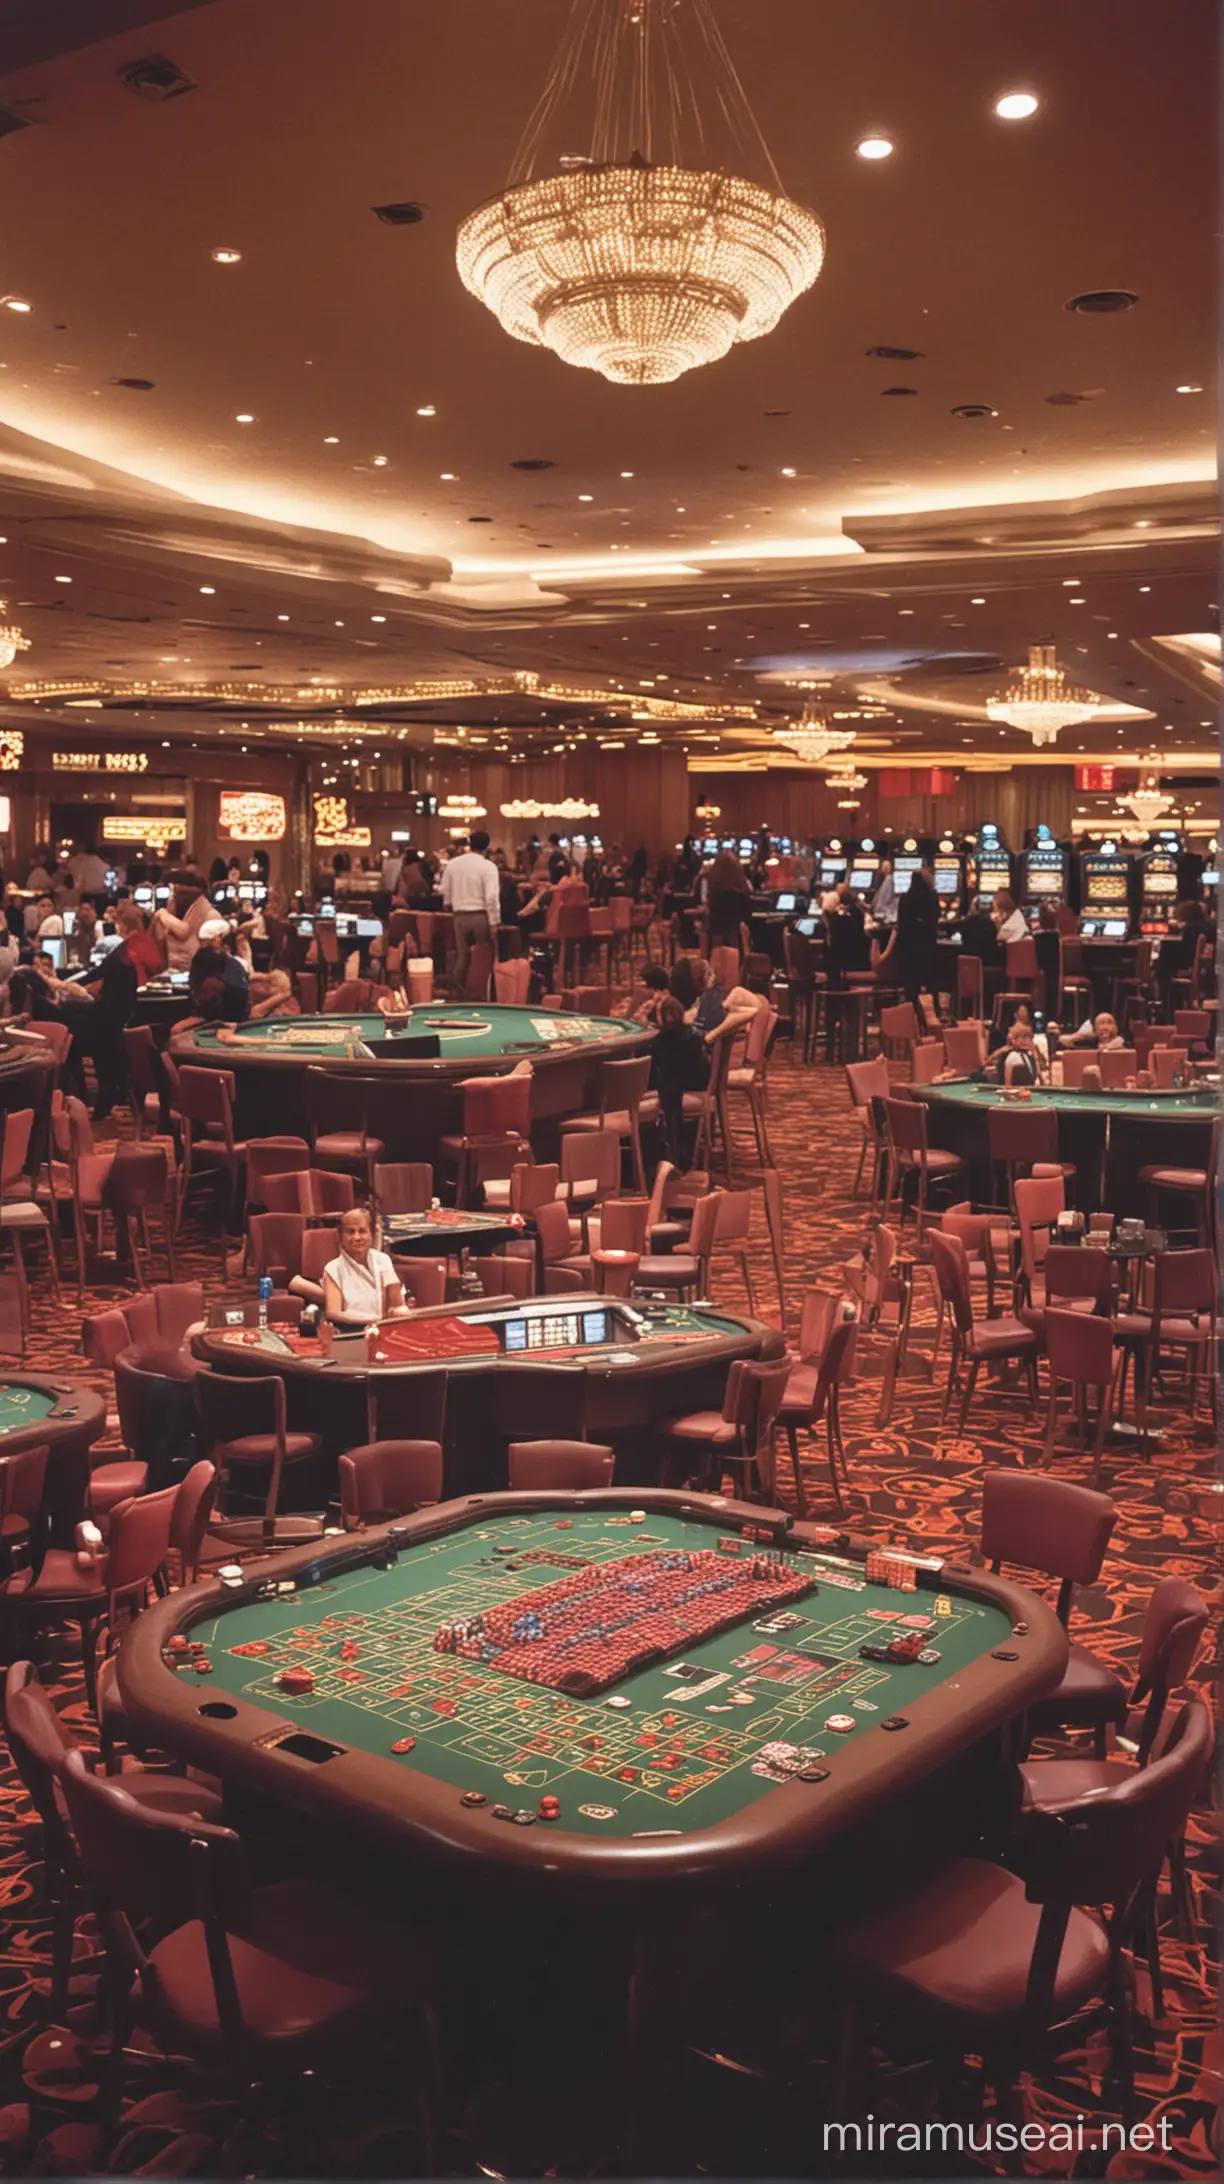 Make a photo of a casino in  Vegas in the 80s